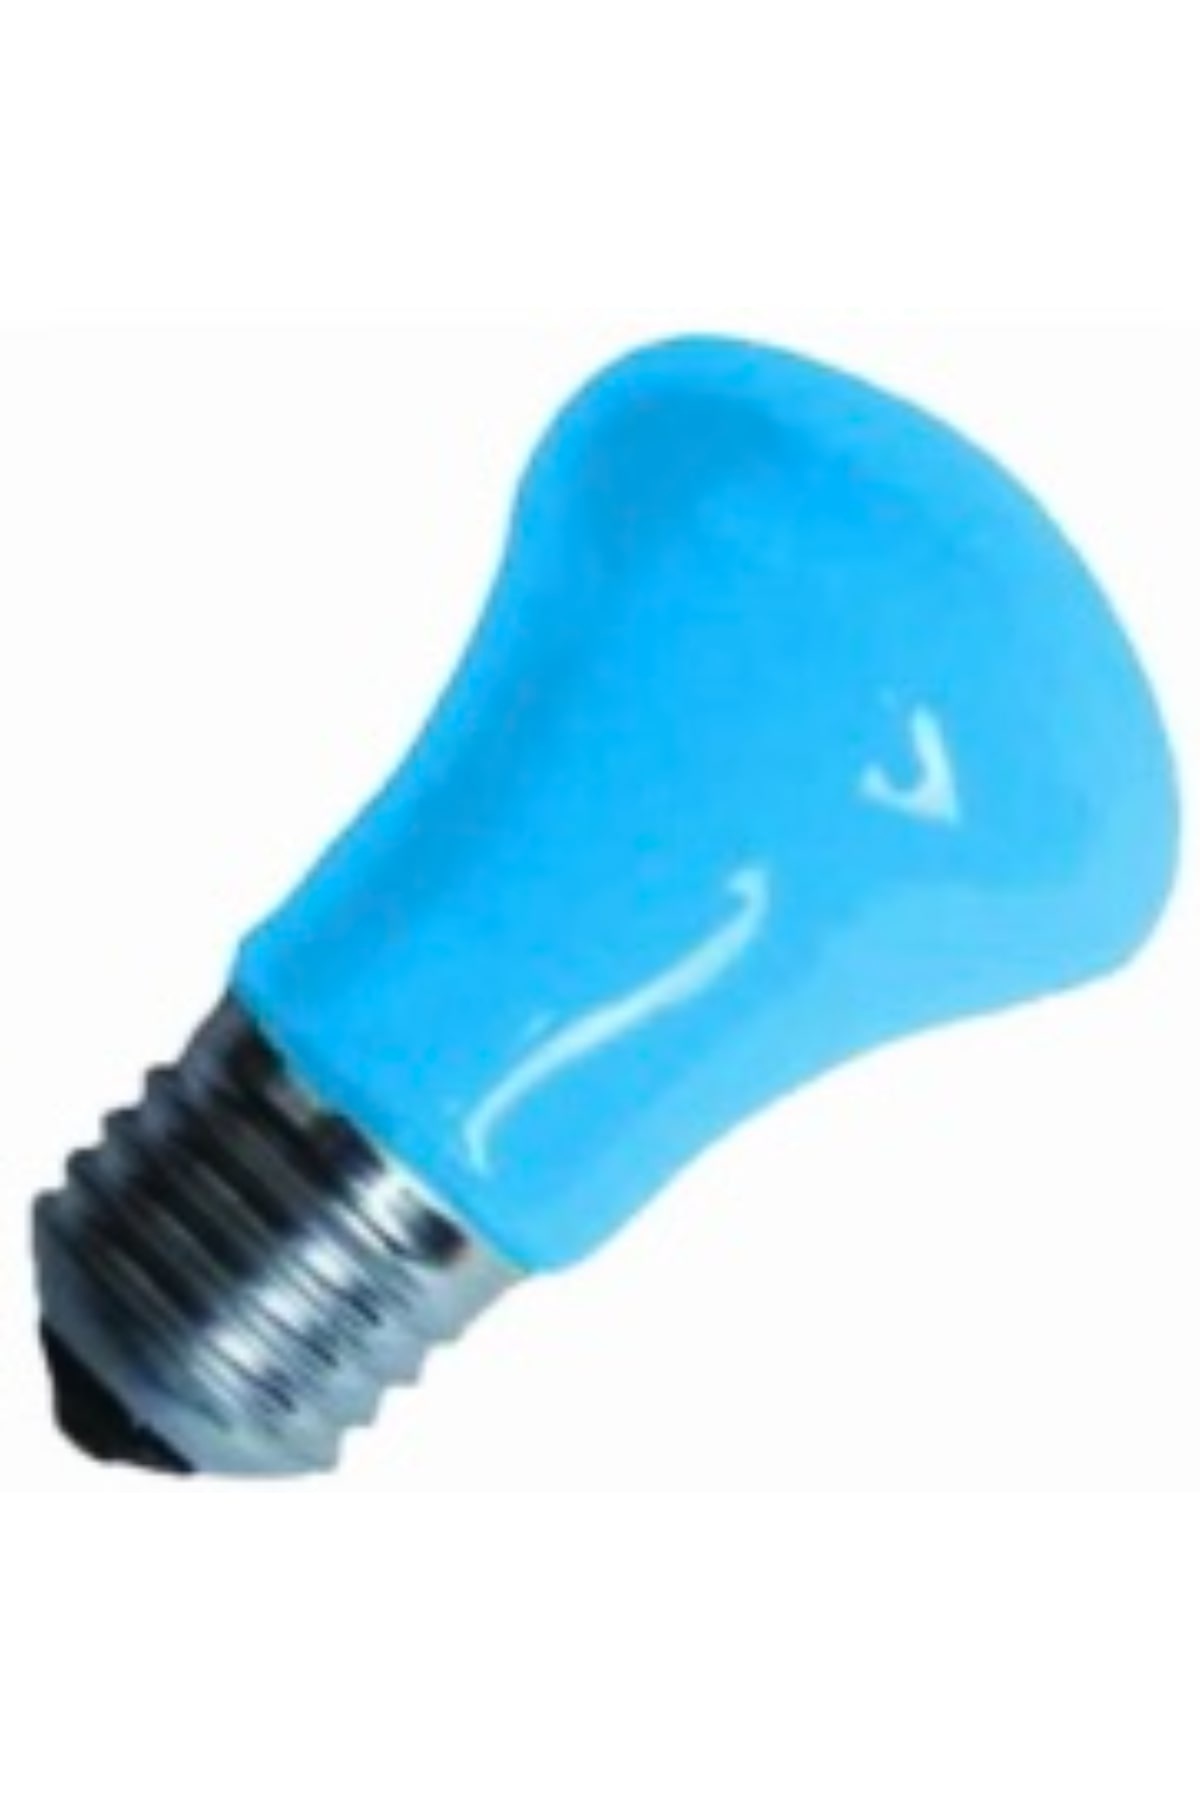 İtalyano Mantar Mavi Gece Lambası Ampul 10W E27*10X60 - 10-0620 - 2345